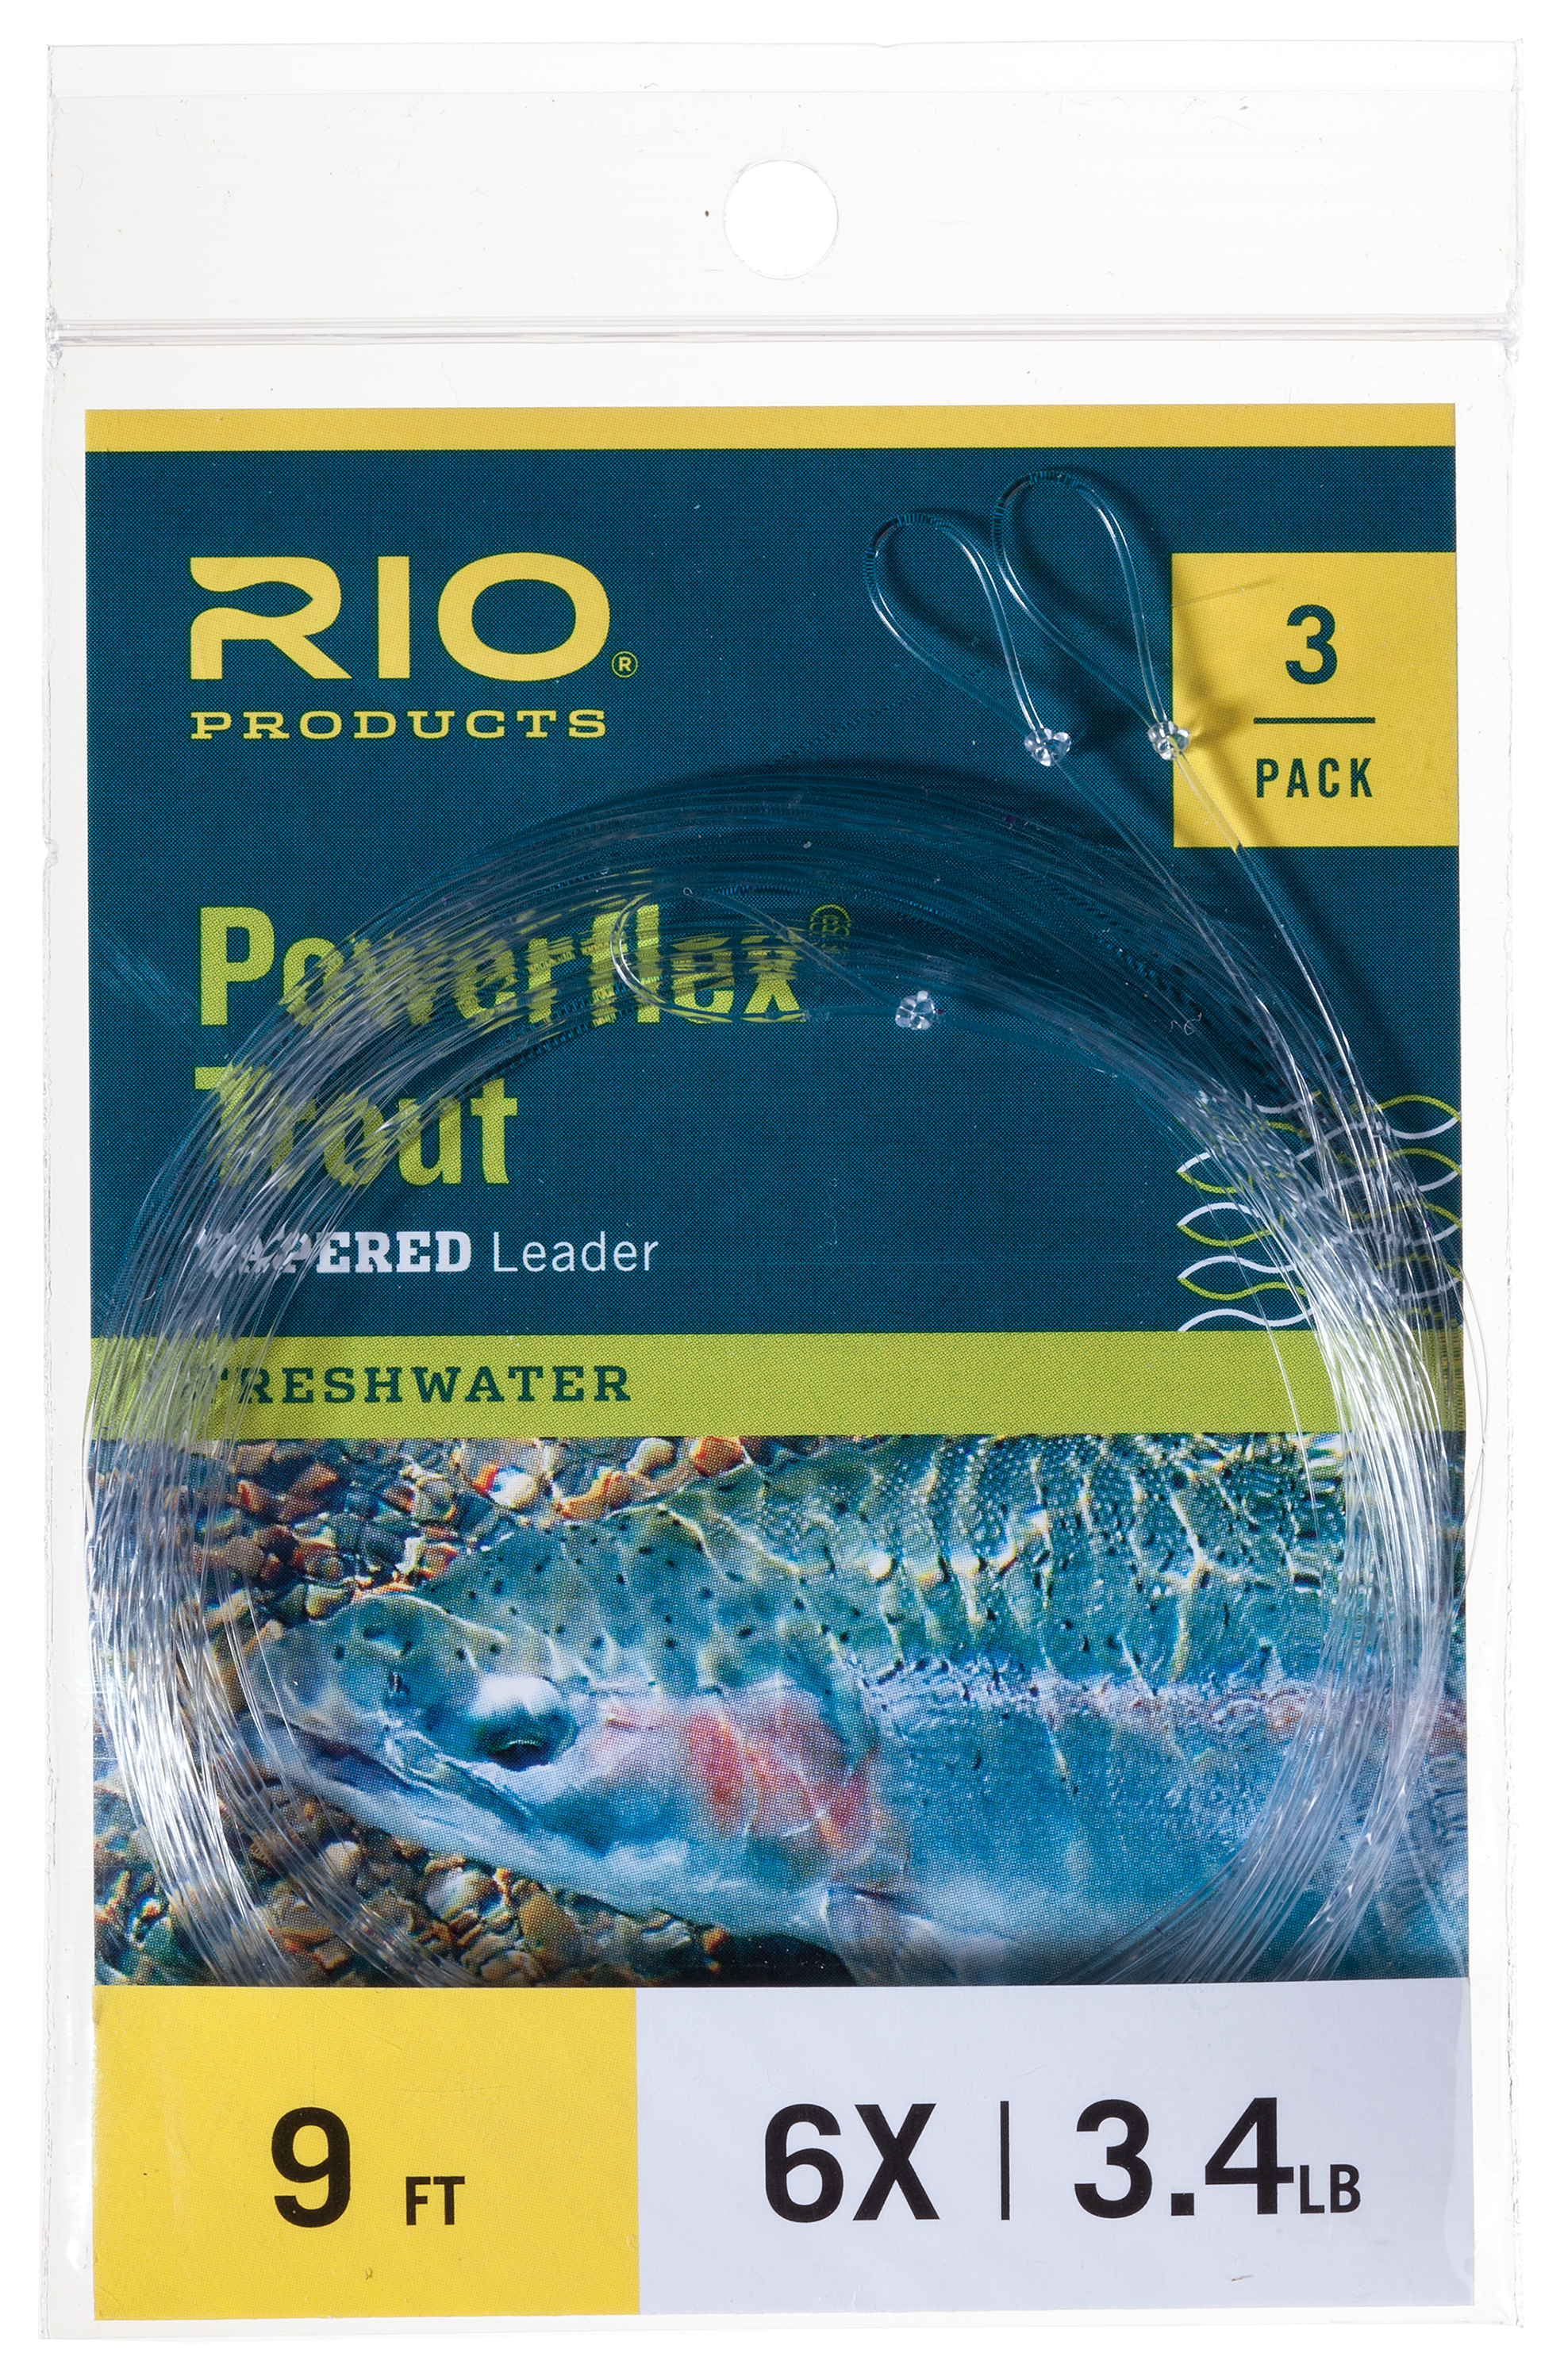 Rio Fly Fishing Powerflex Plus 7.5ft Leader 3 Pack